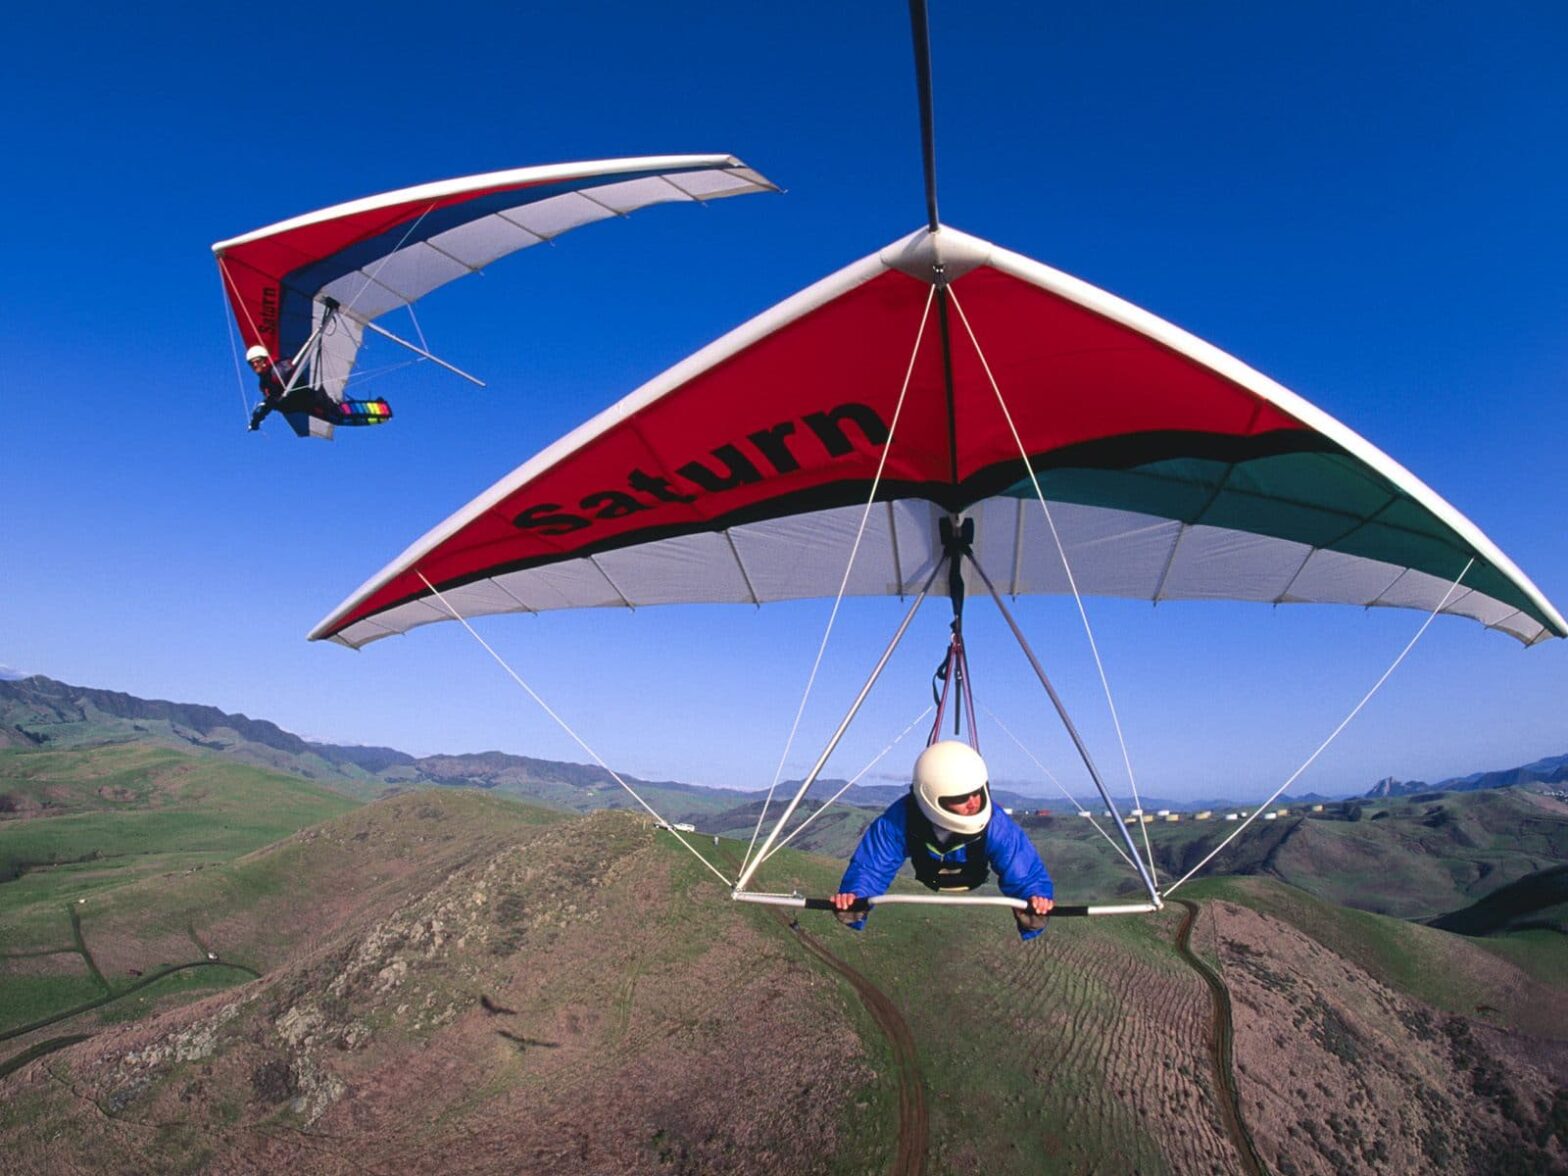 People Flying on Hang Gliders